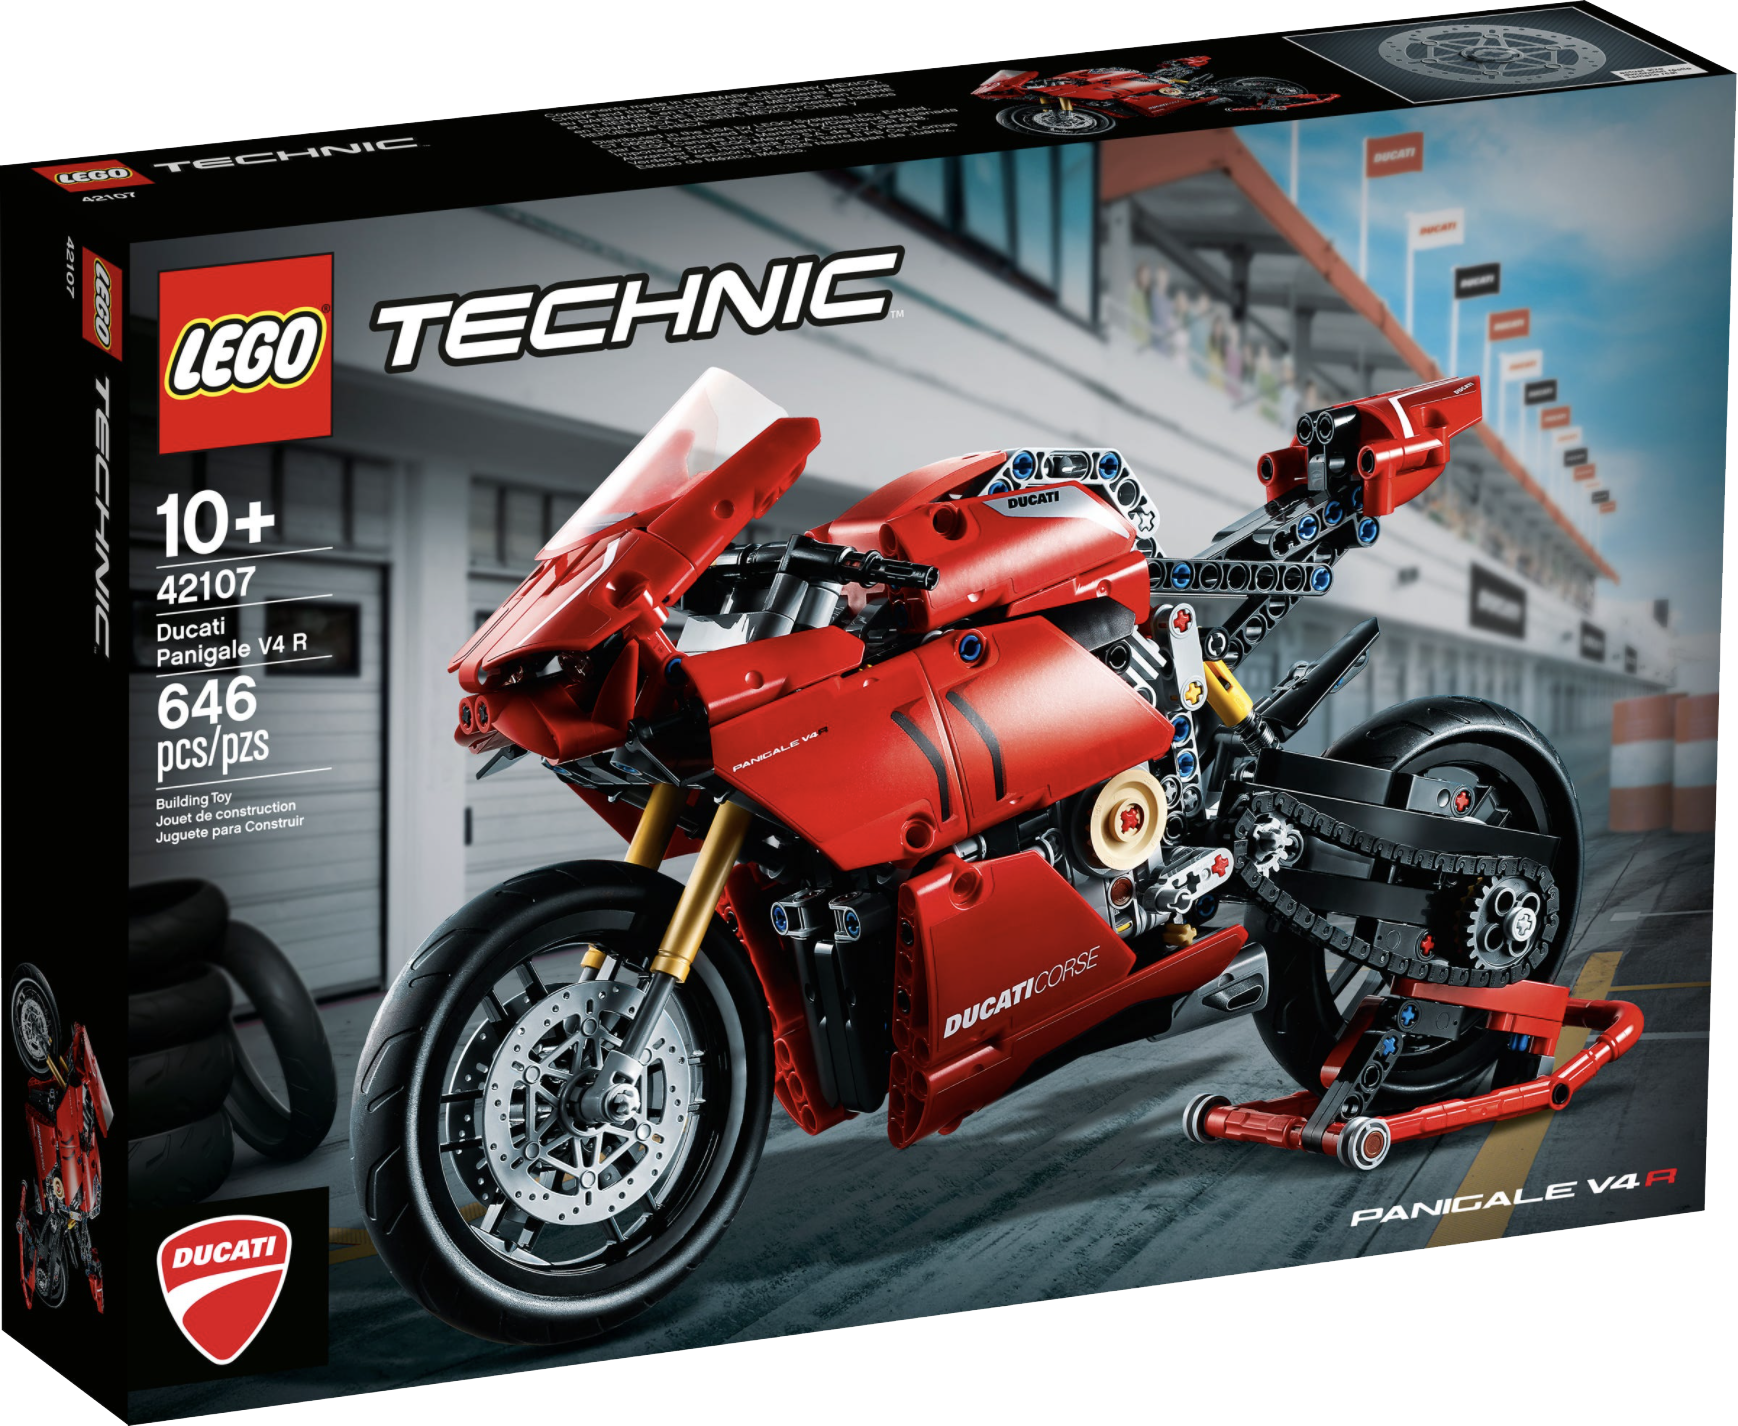 idée cadeau noël motard : Ducati Panigale V4 R Lego